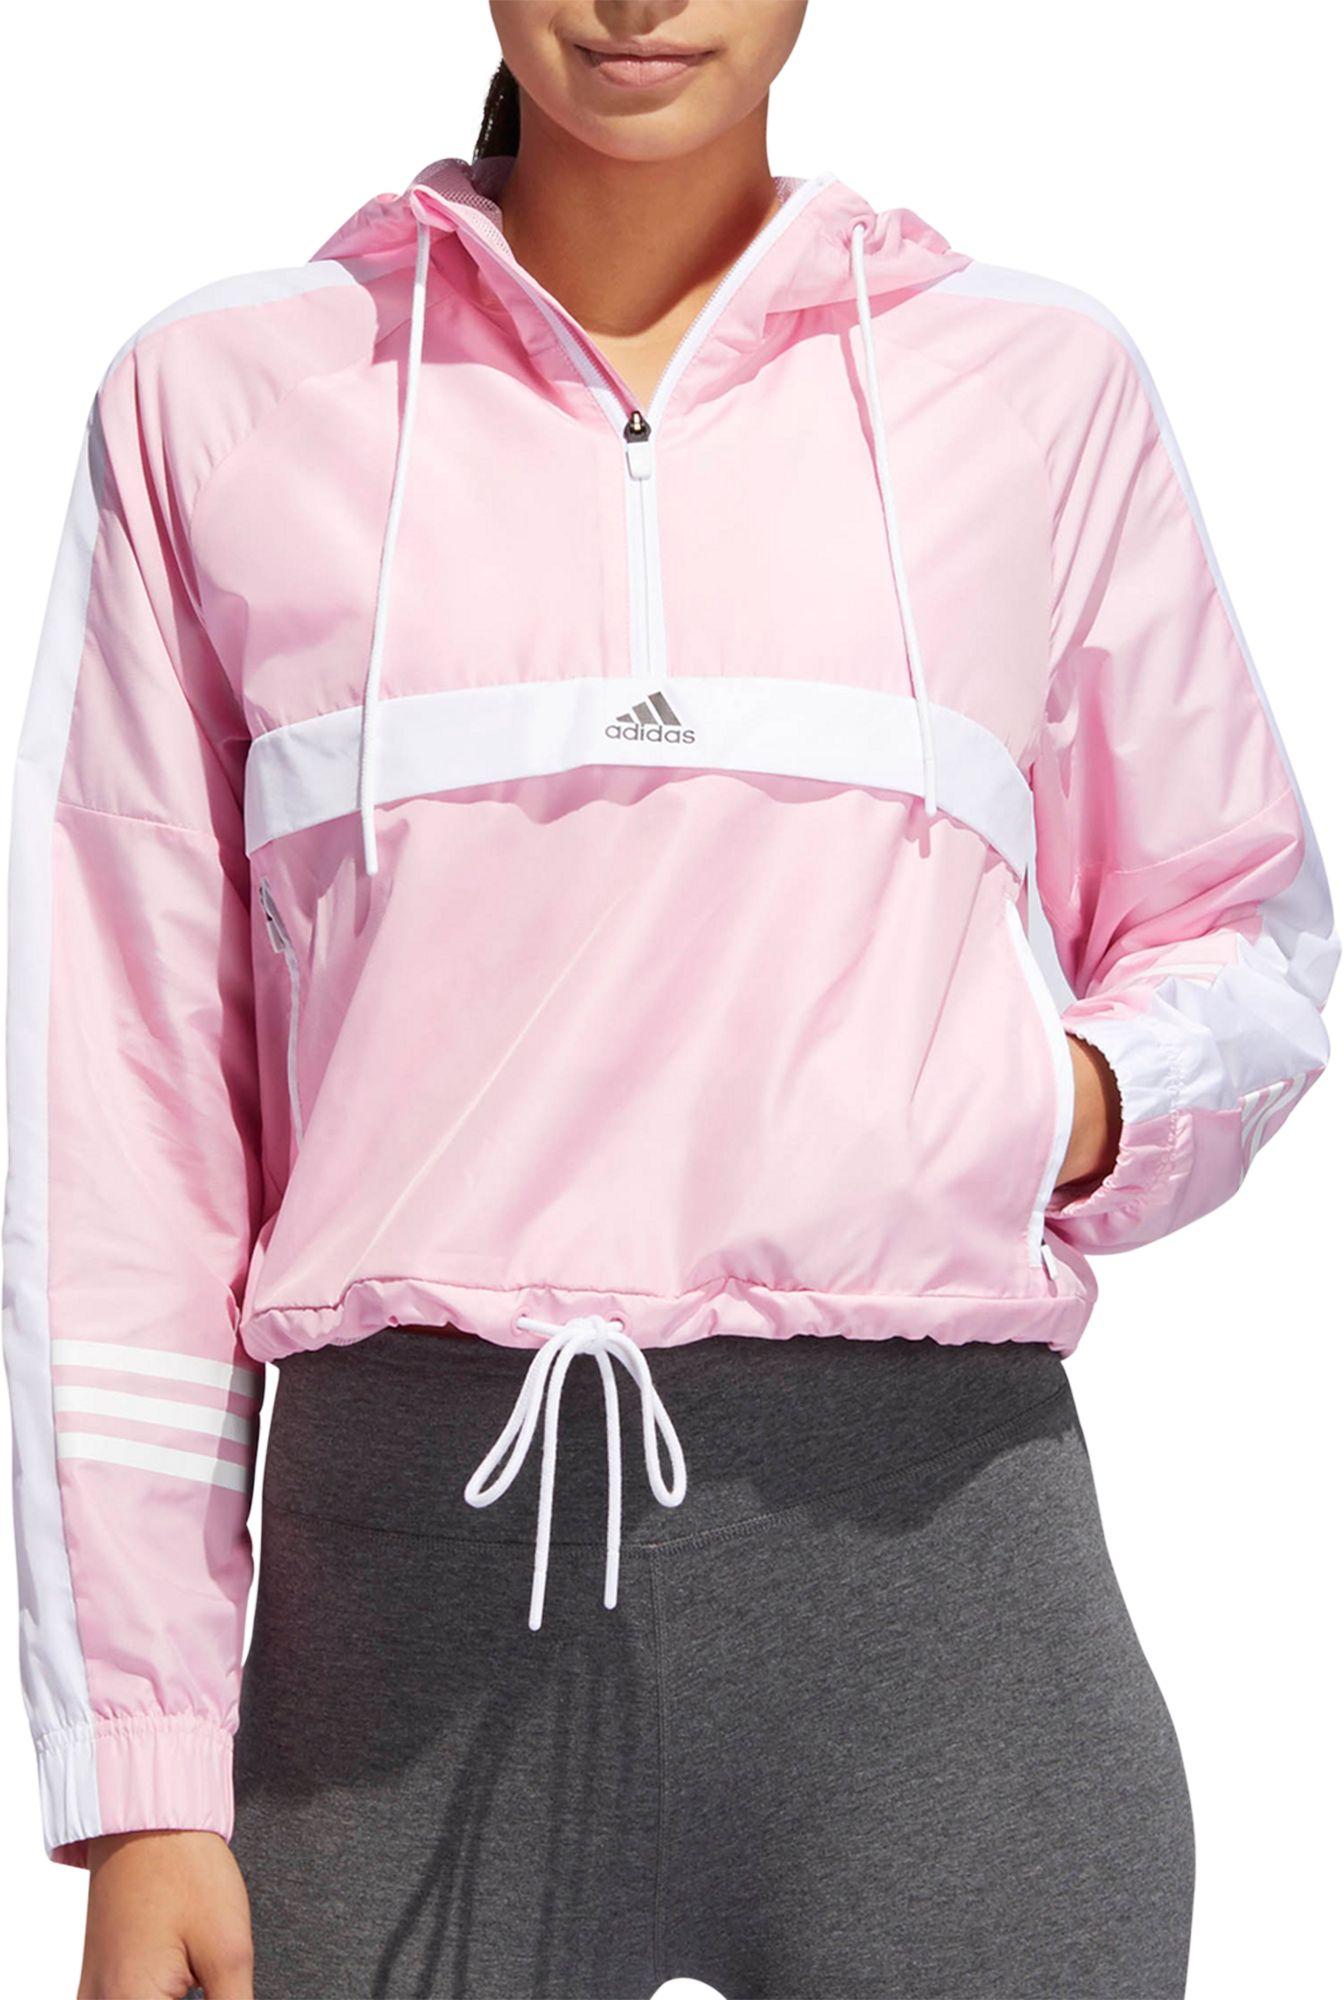 adidas women's id wind half zip jacket